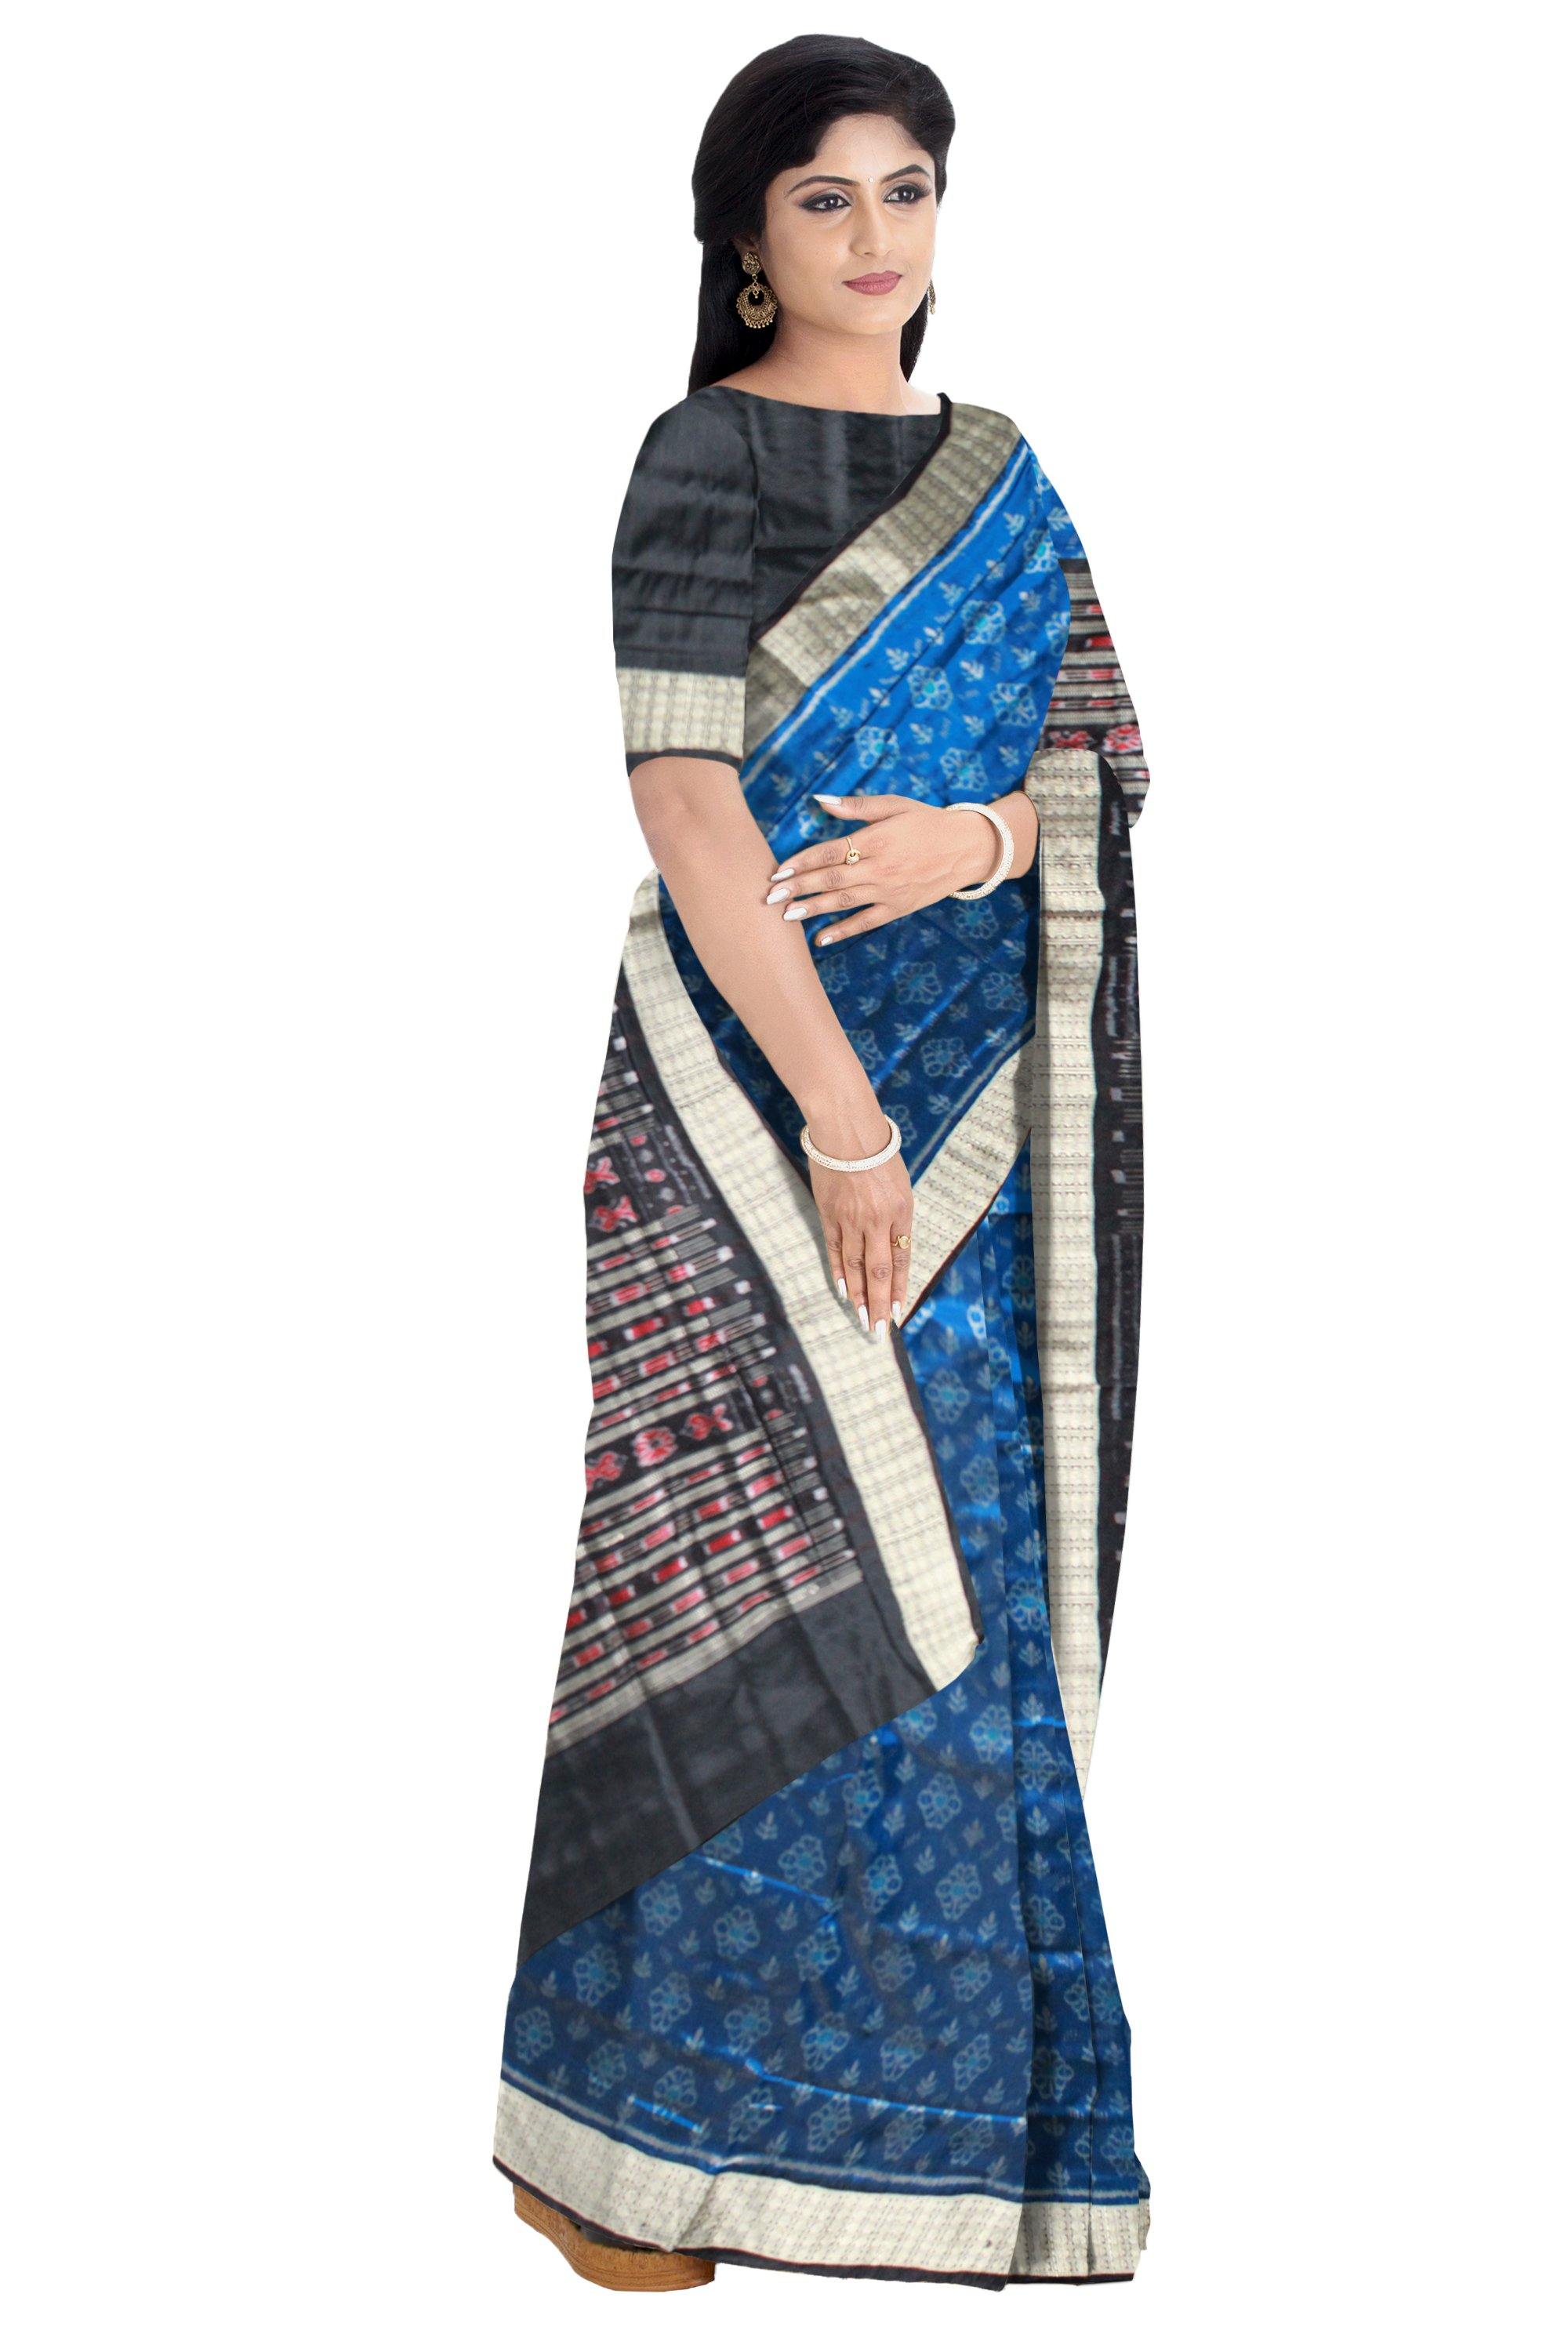 Authentic flora design pure pata saree in blue color with blouse piece - Koshali Arts & Crafts Enterprise